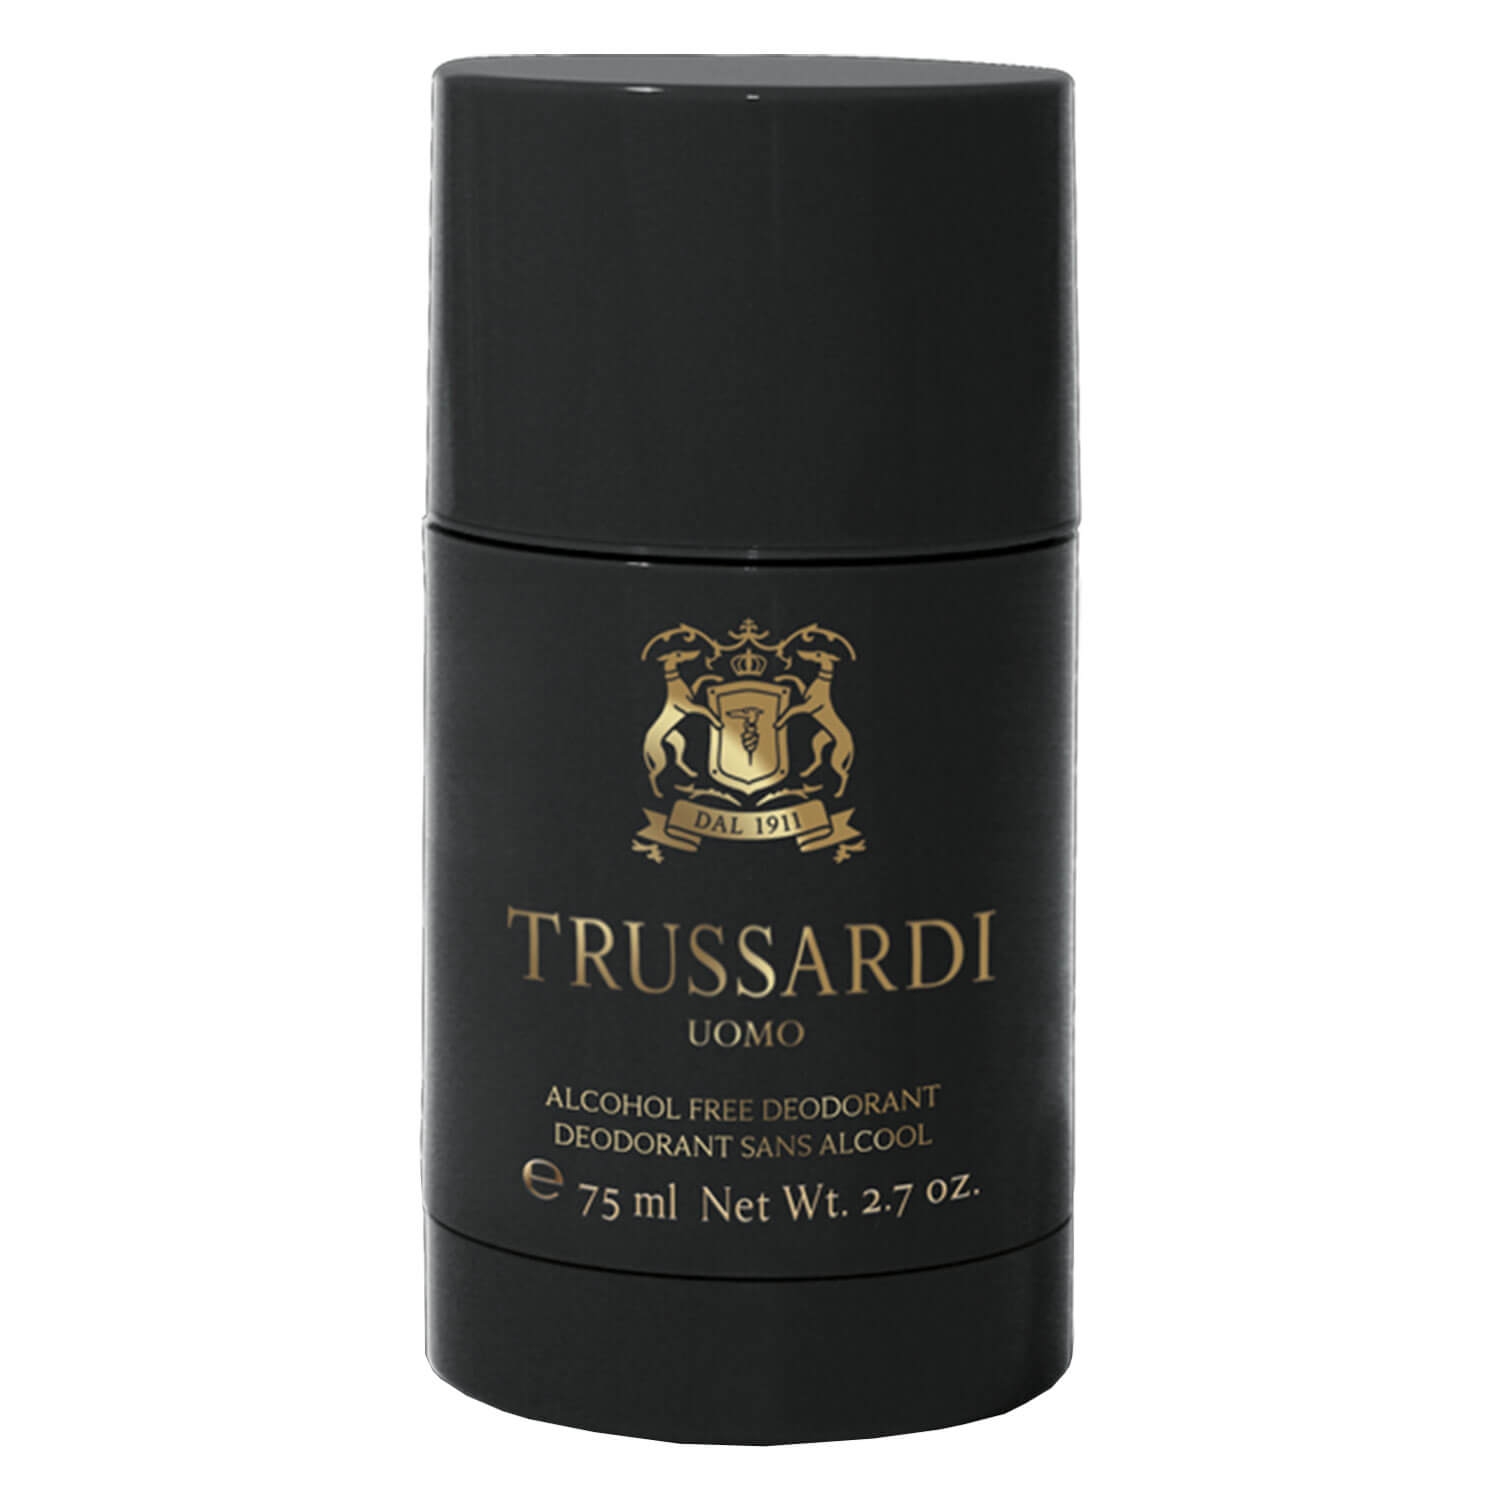 Product image from Trussardi Uomo - Alcohol Free Deodorant